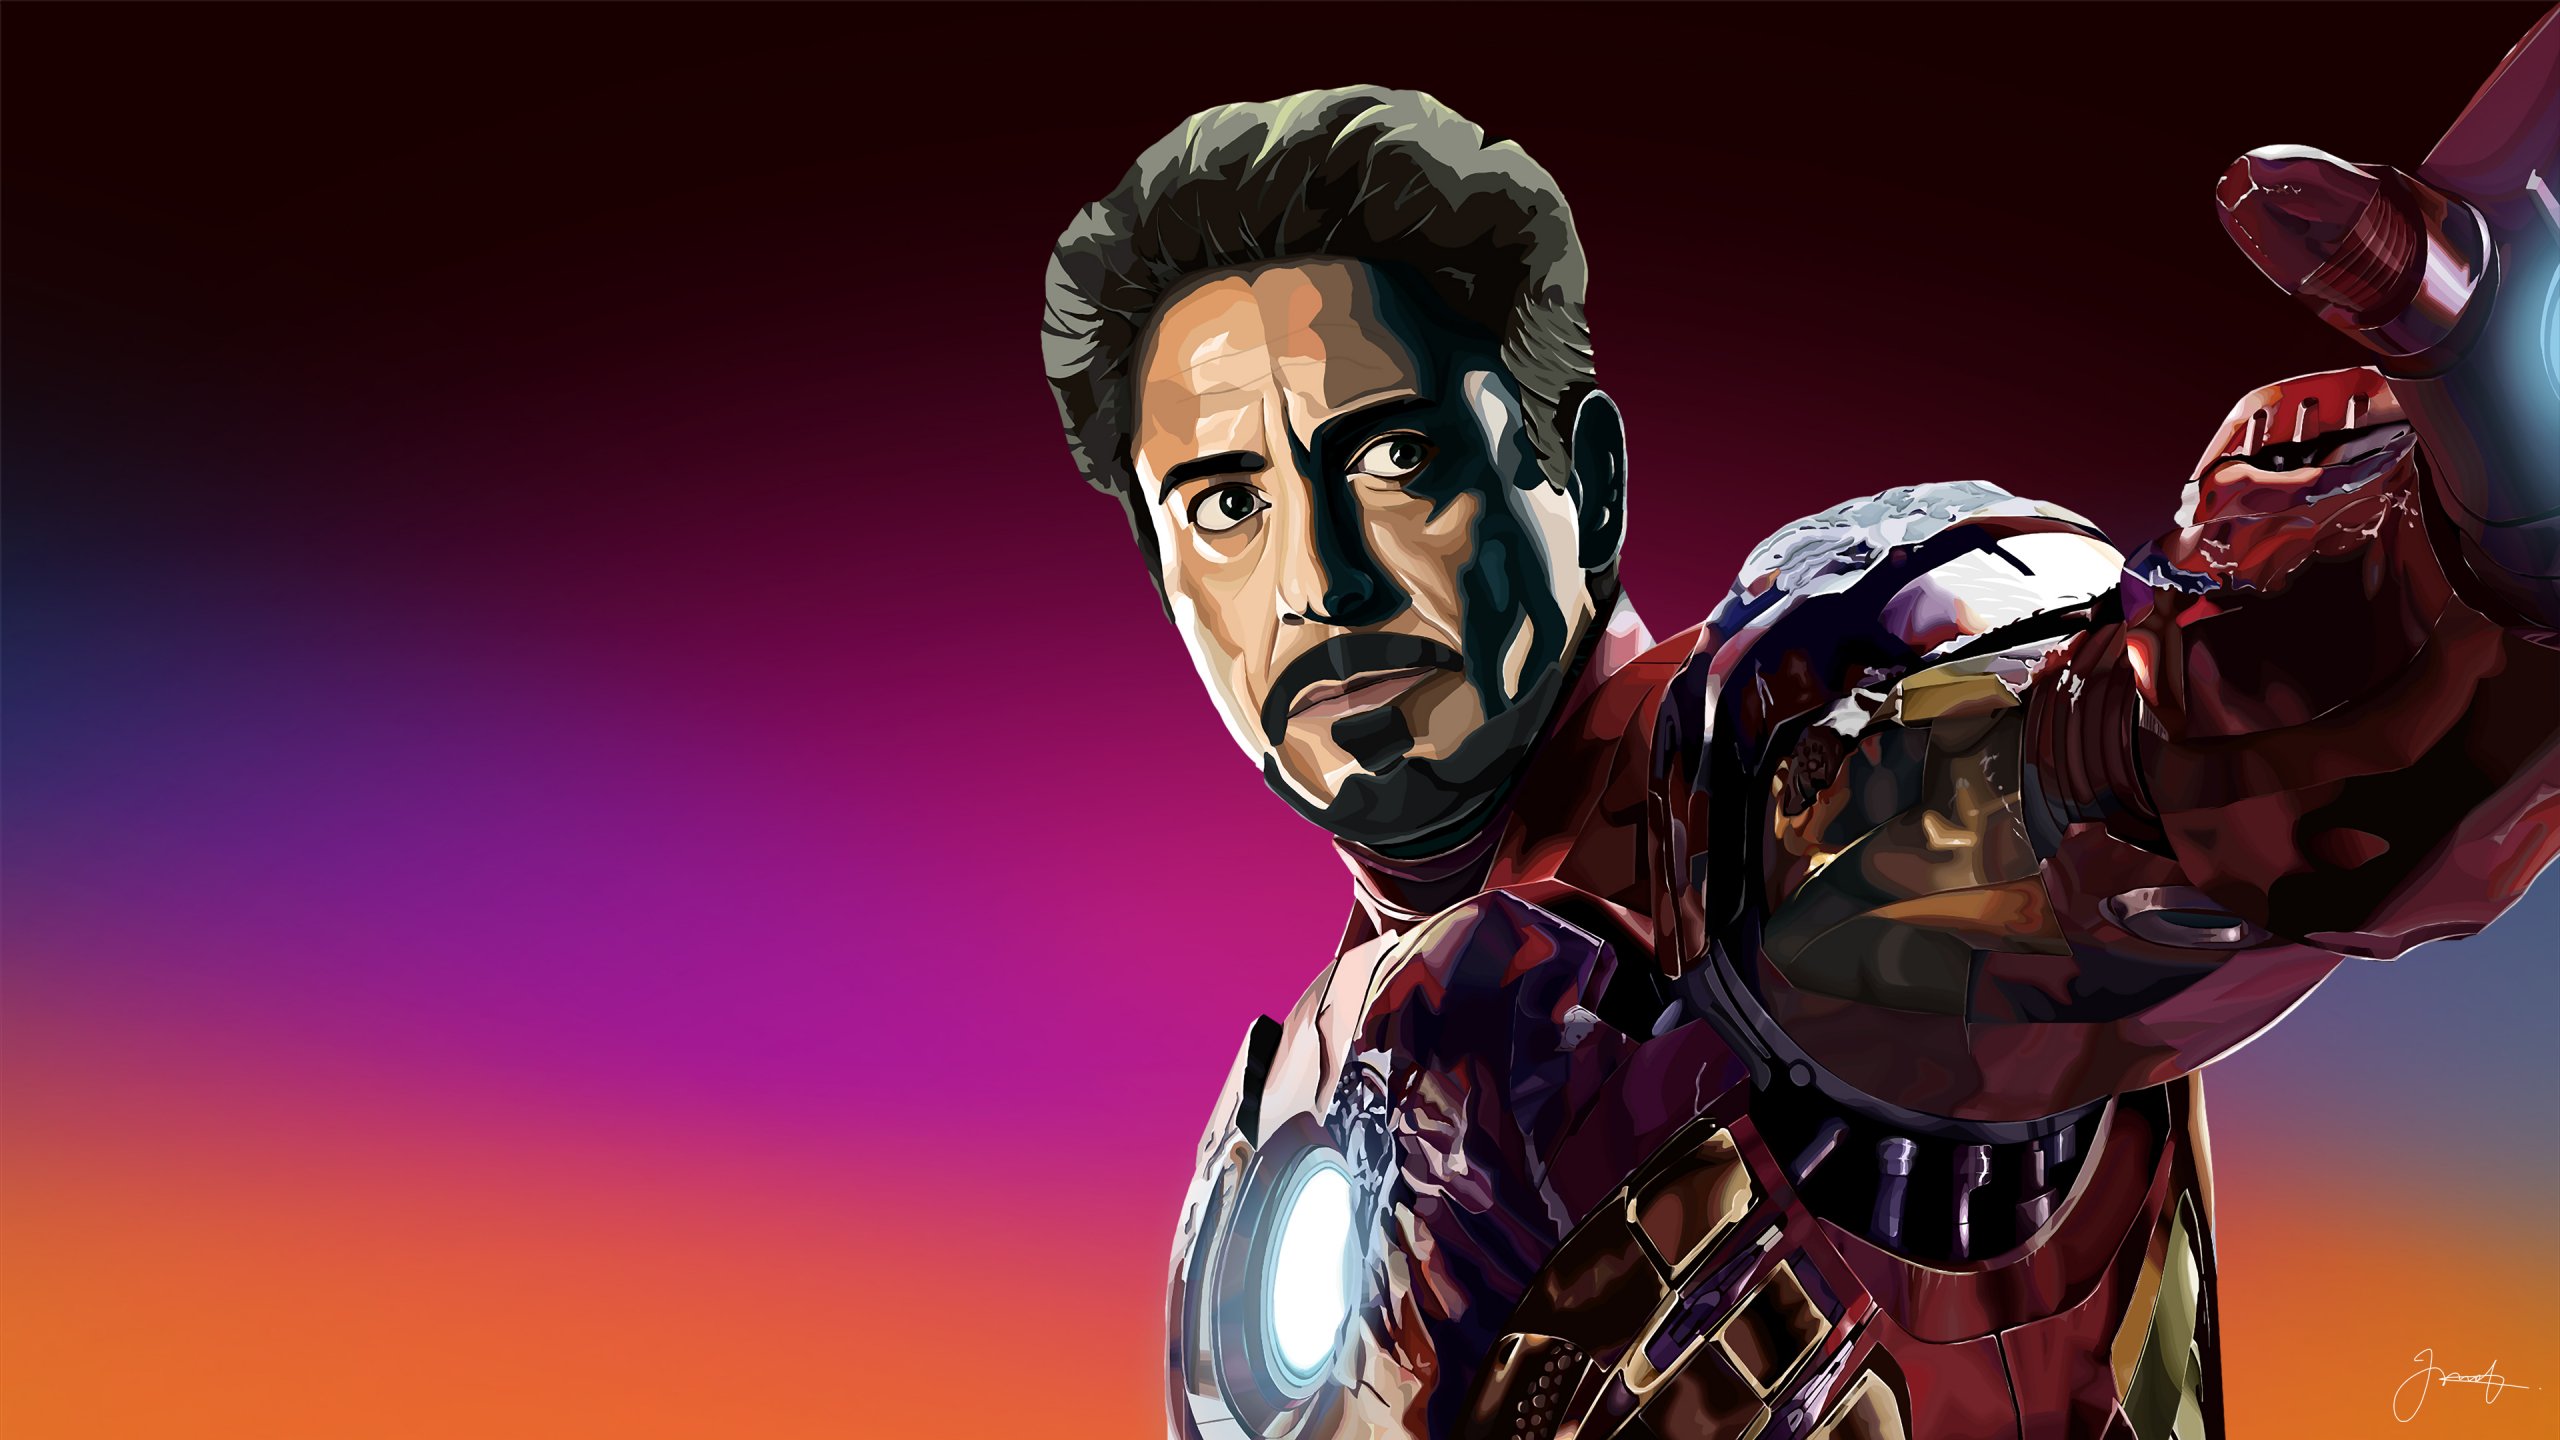 Robert Downey Jr asTony Stark Iron Man Fanart Wallpaper 4k Ultra HD ID:7024